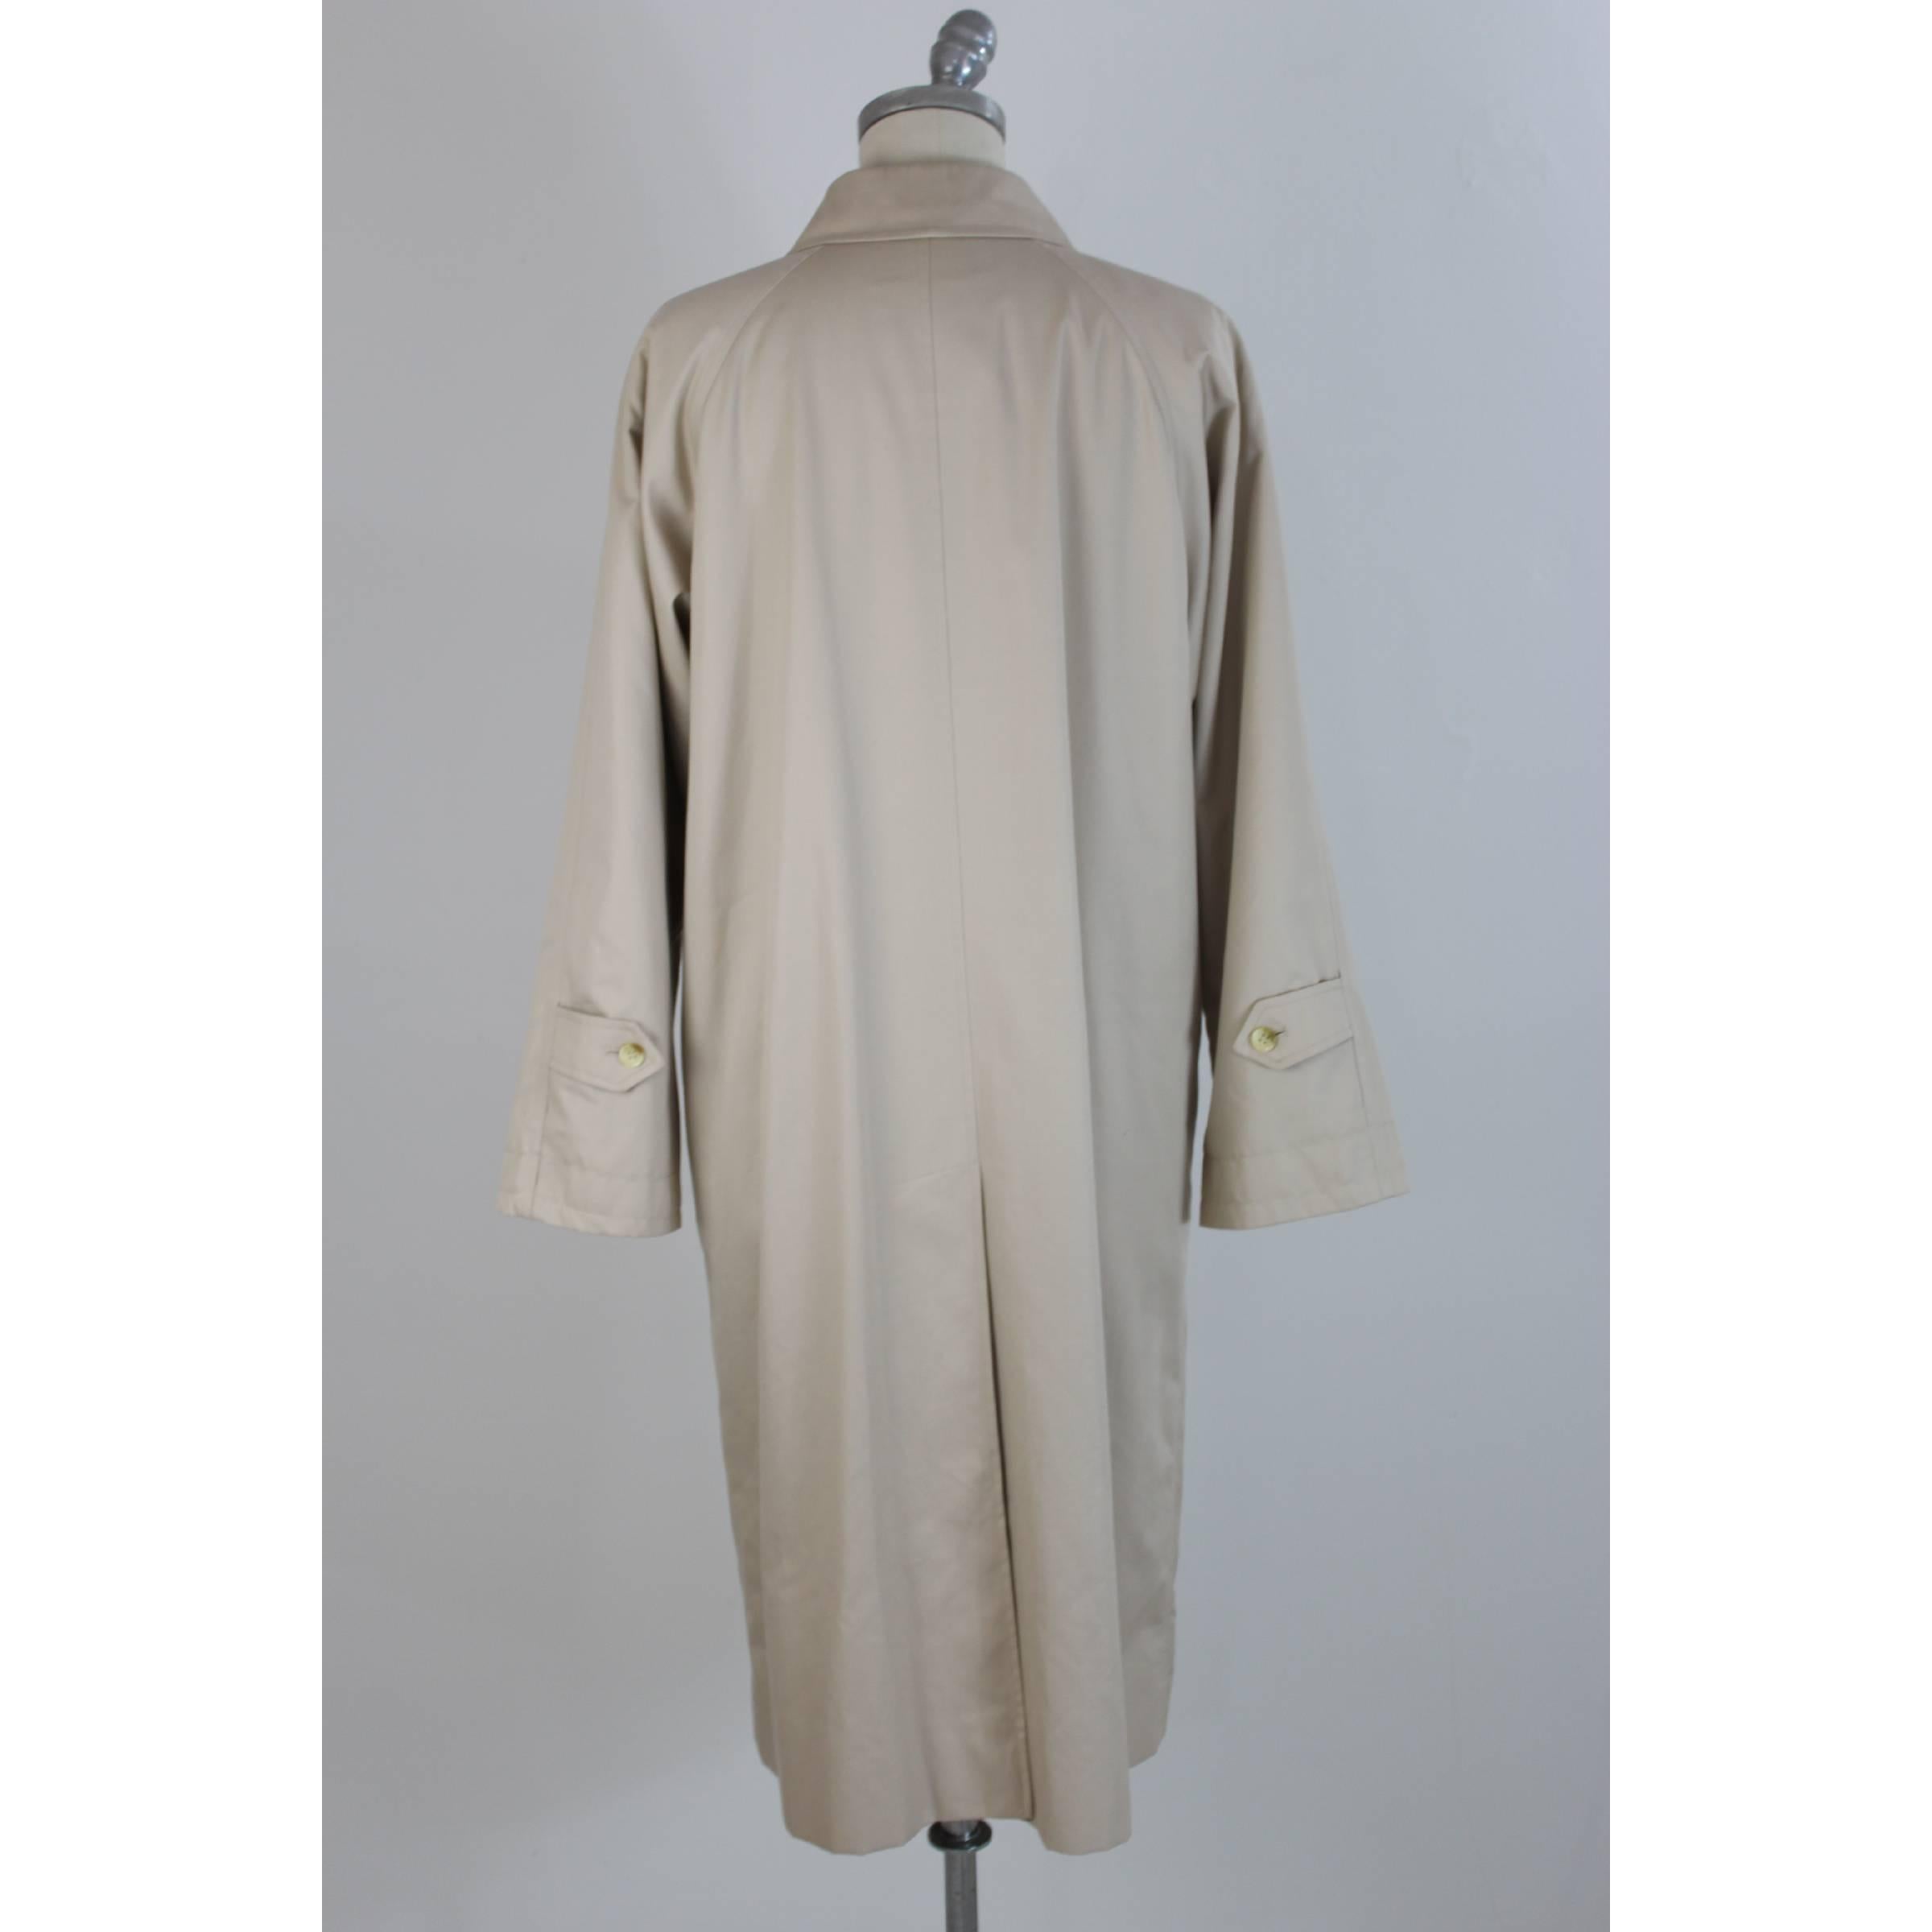 Burberry women's vintage raincoat in beige cotton. Size 10 UK regular. Made in UK. Excellent vintage conditions

Size 42 It 8 Us 10 Uk

Shoulders: 42 cm
Bust / chest: 50 cm
Sleeves: 58 cm
Length: 117 cm

Material: 51% cotton 49%